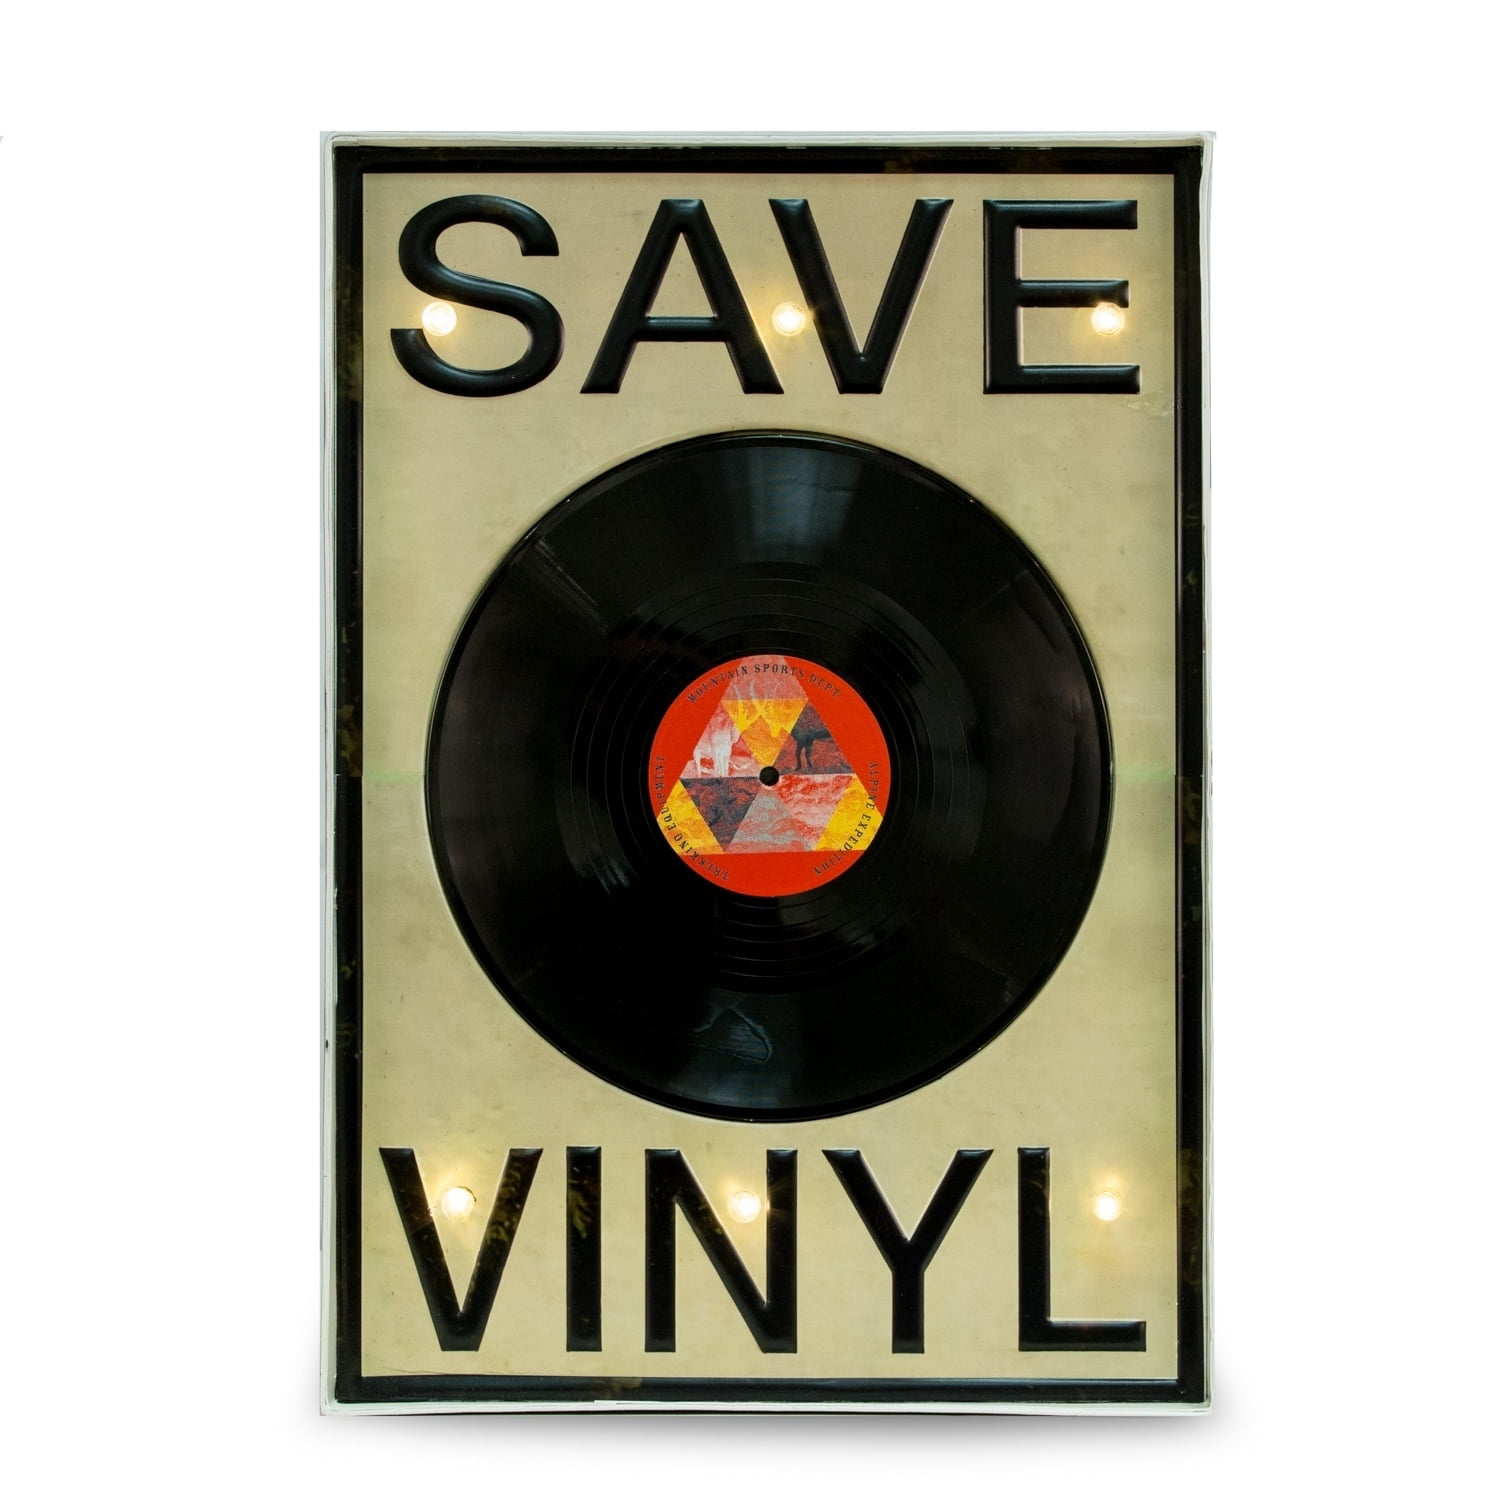 Bey-berk International Wd511 Save Vinyl Led Lighted Metal Sign - Black, Red & Yellow